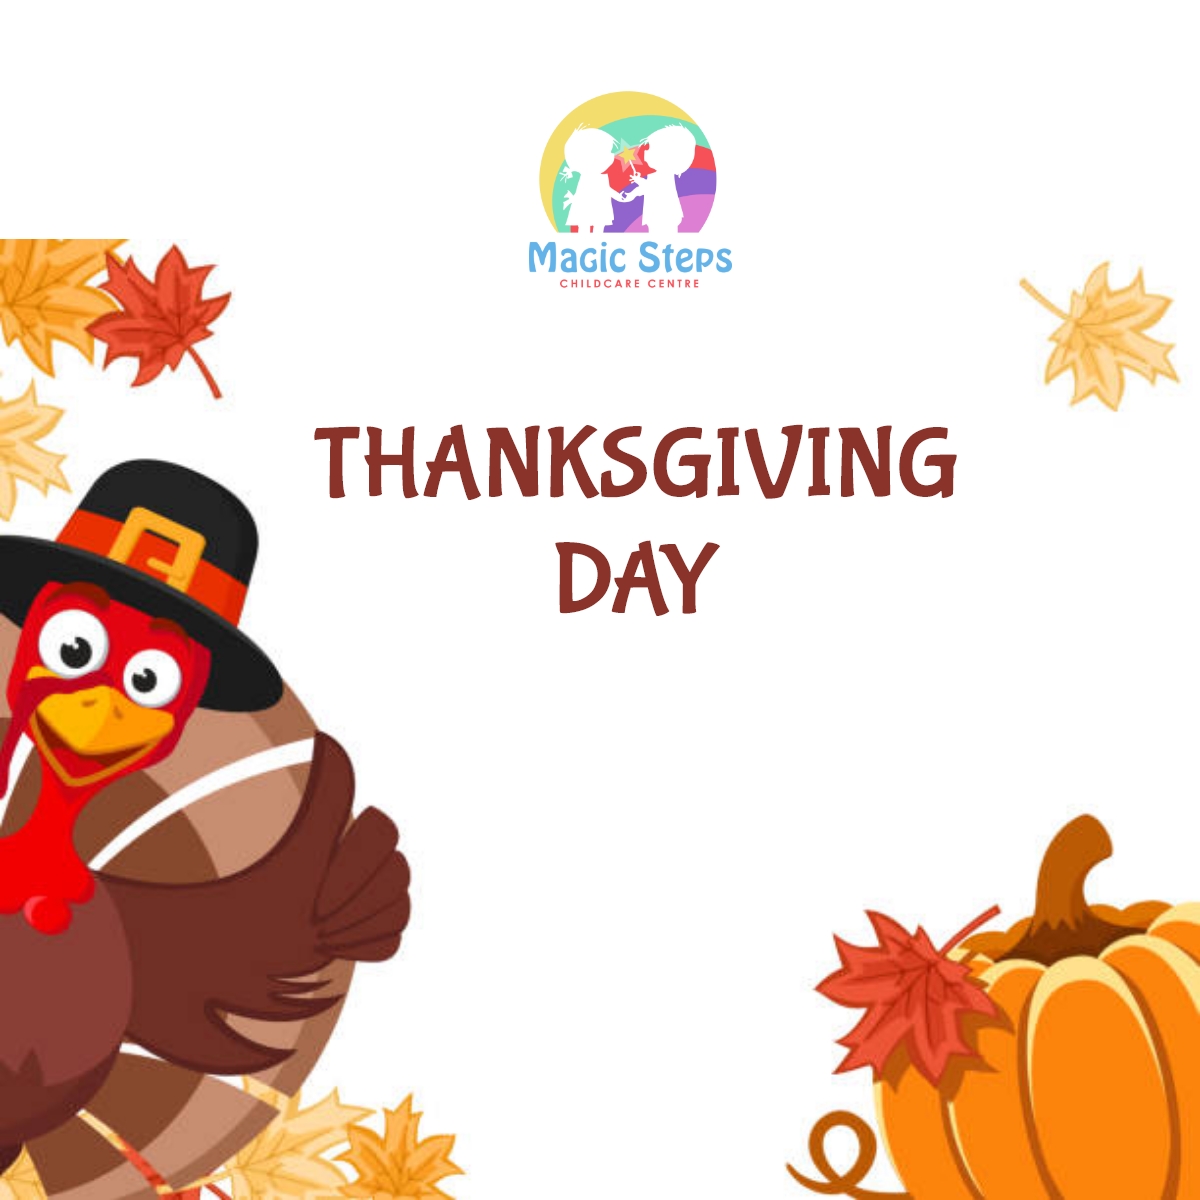 Thanksgiving Day- Thursday 24th November